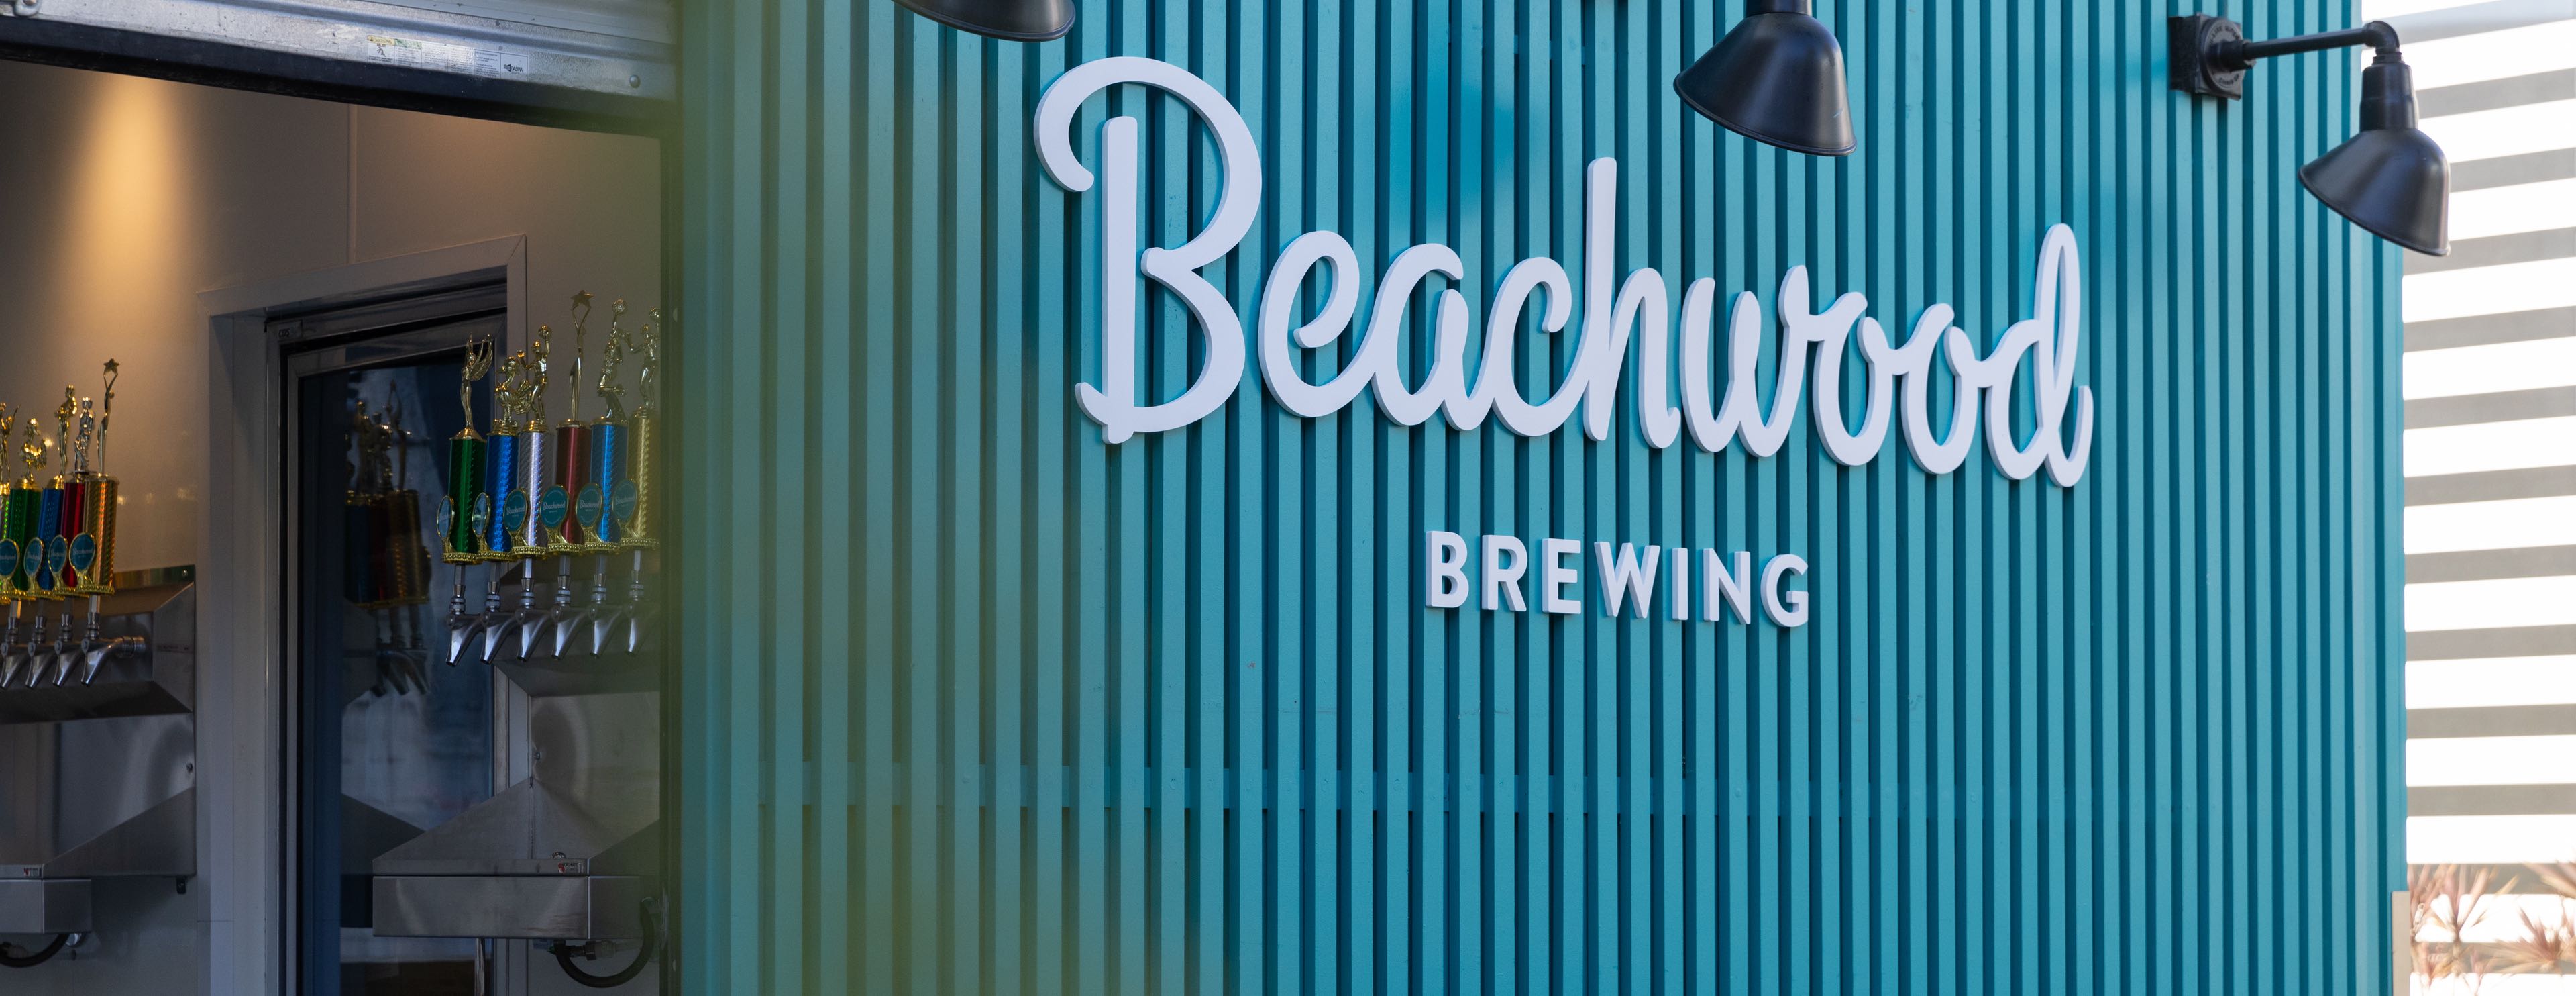 Visit Beachwood